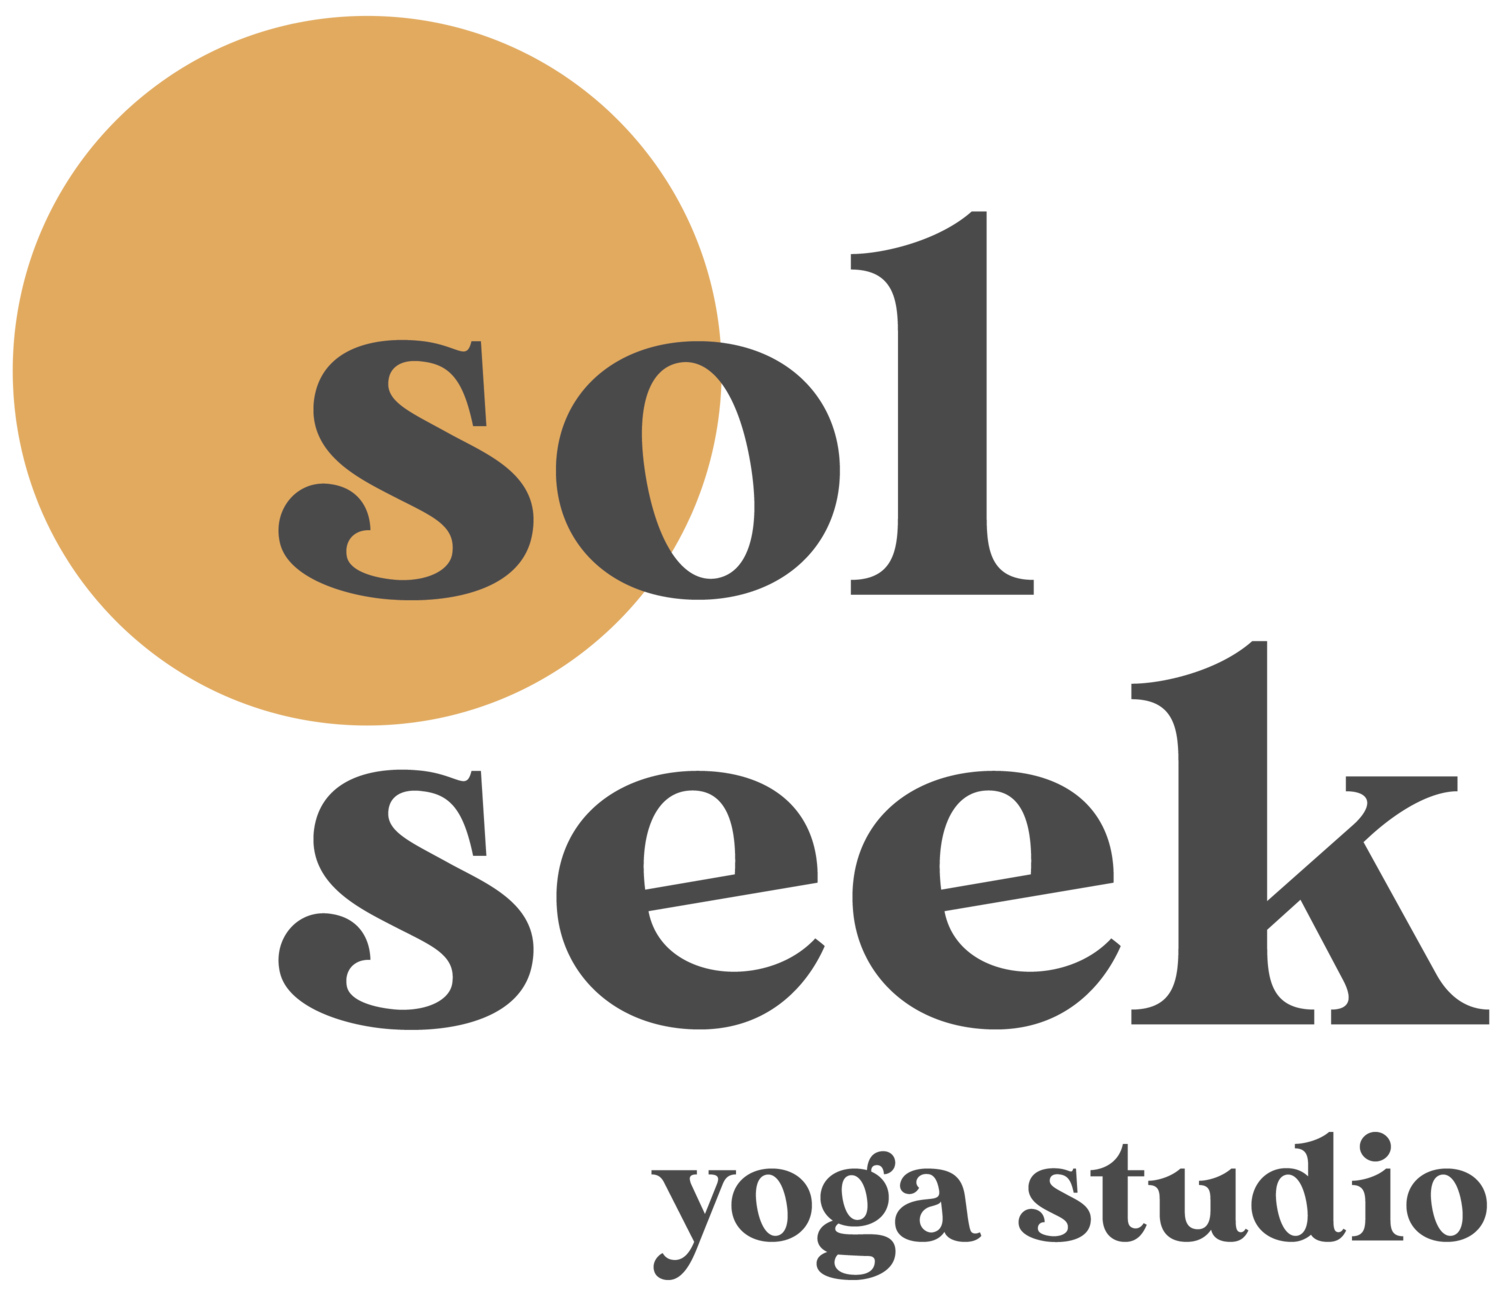 Sol Seek Yoga Studio - Santa Barbara and Manhattan Beach